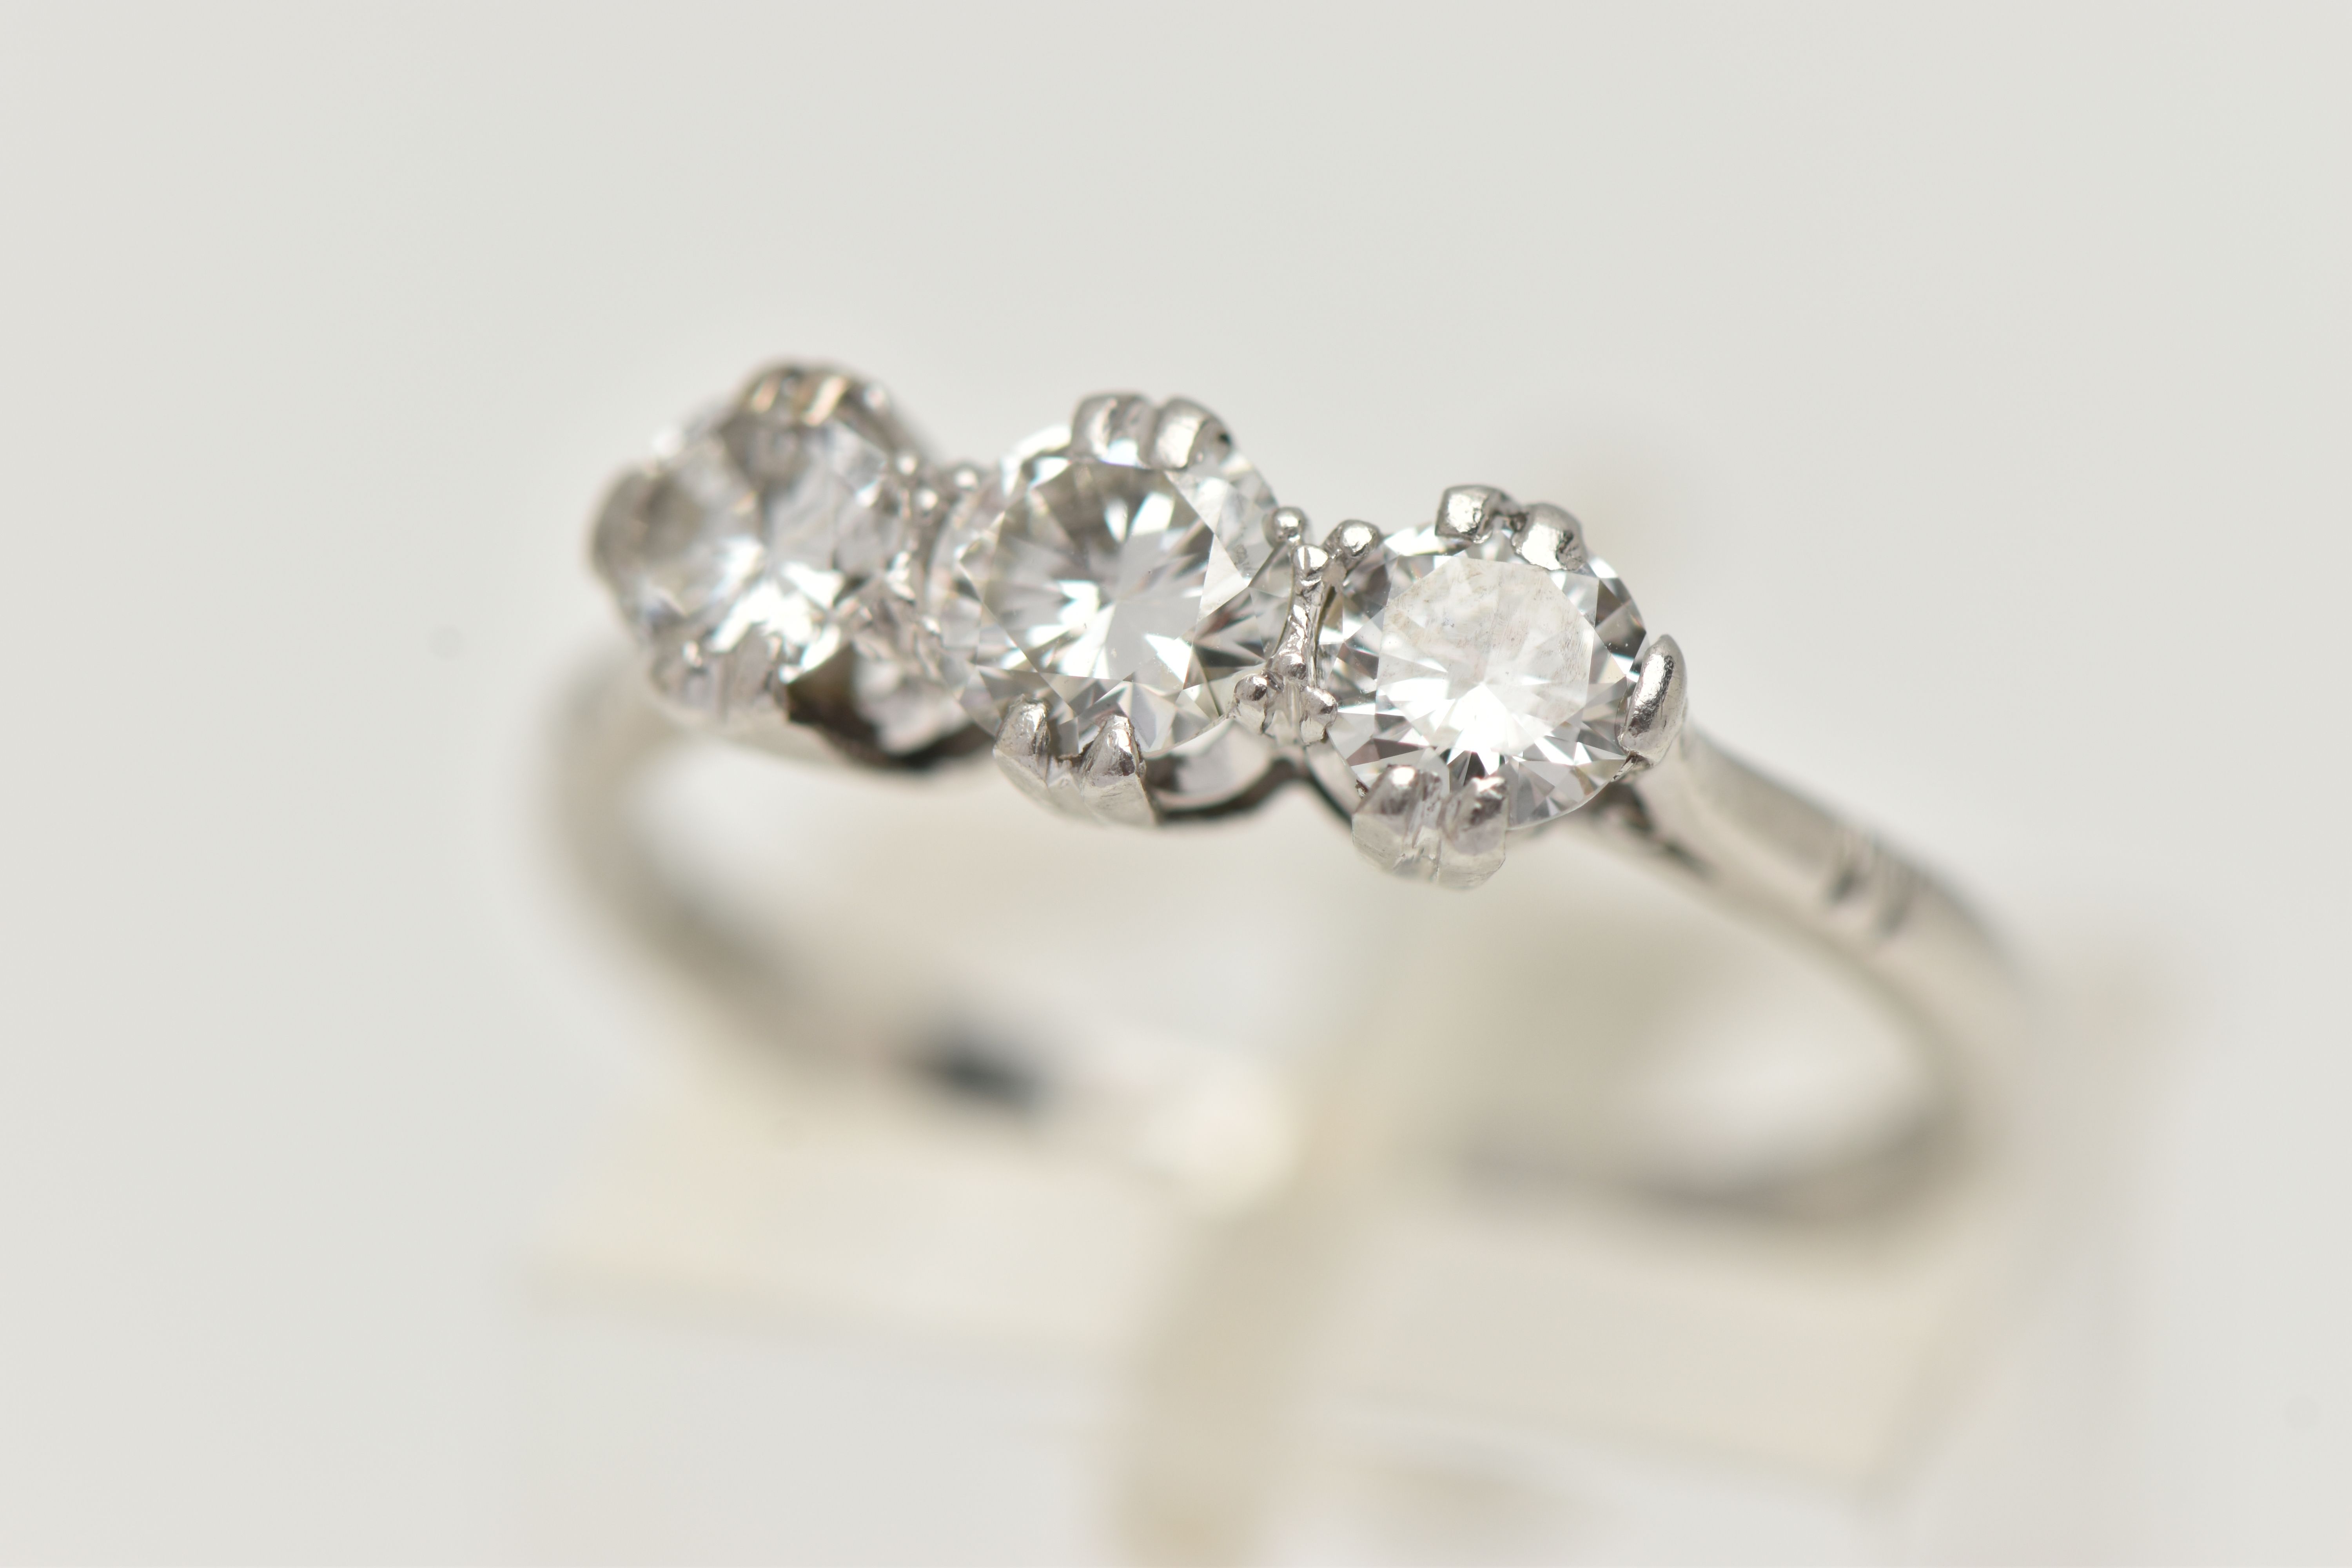 A THREE STONE DIAMOND RING, three round brilliant cut diamonds, approximate total diamond weight 0.